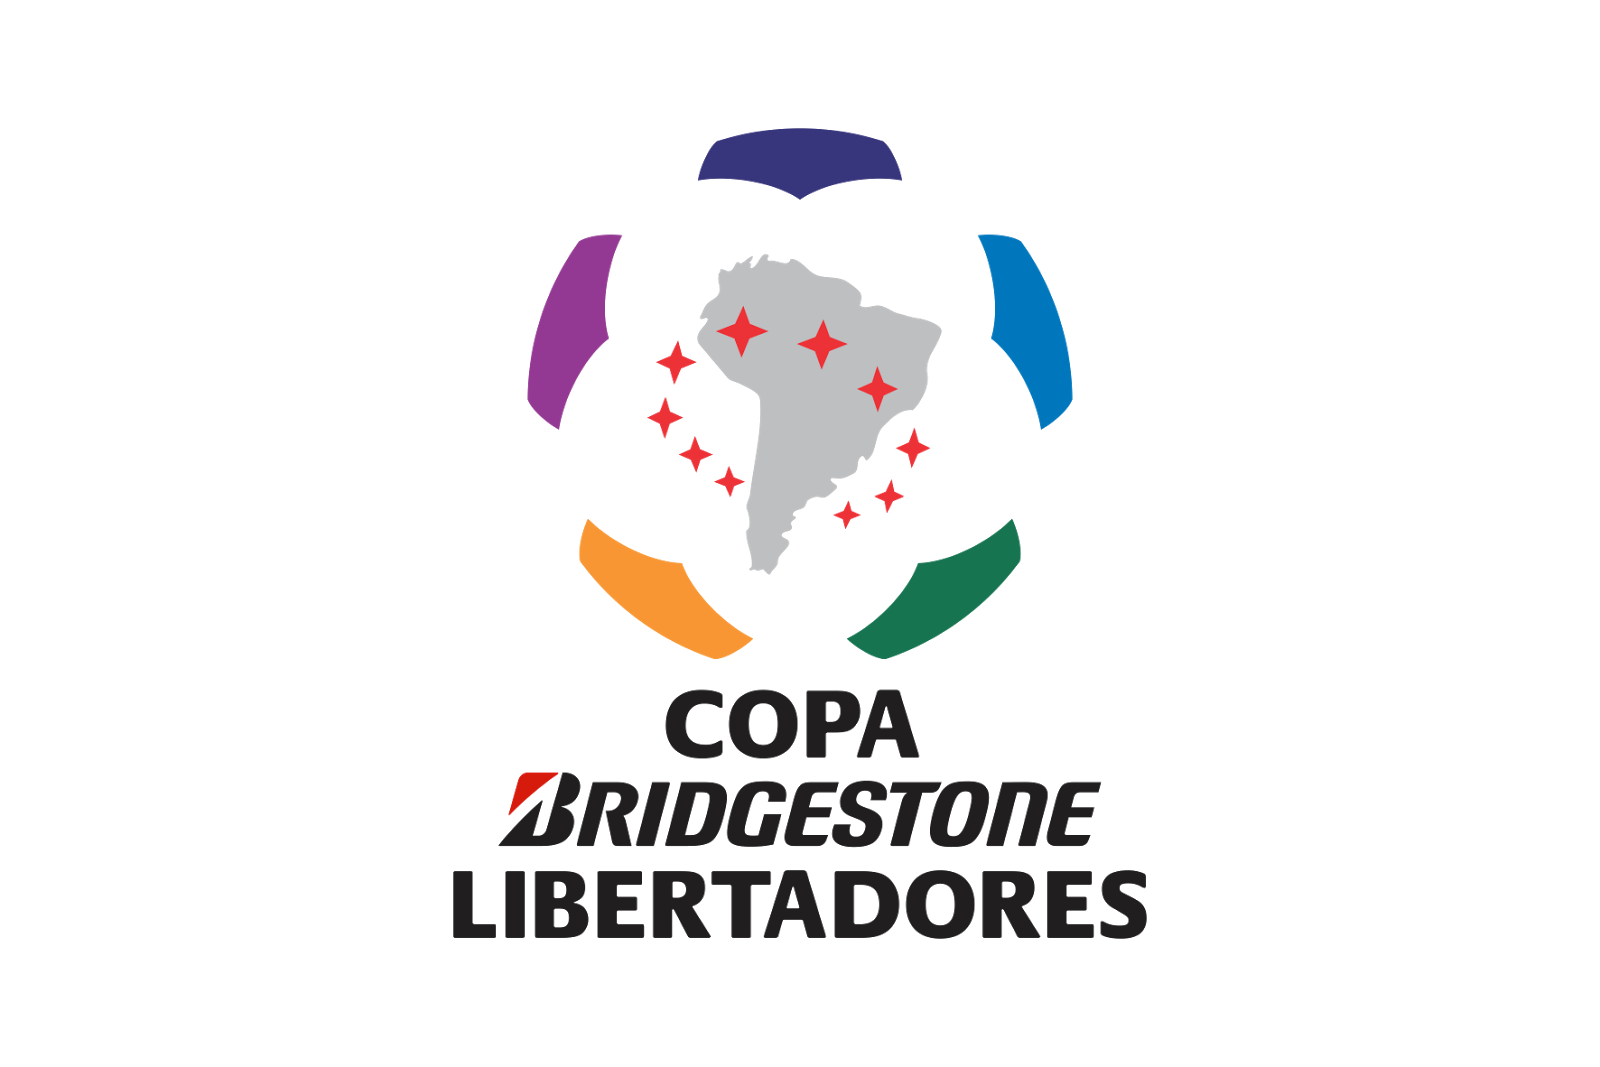 File:2011 Copa América logo.